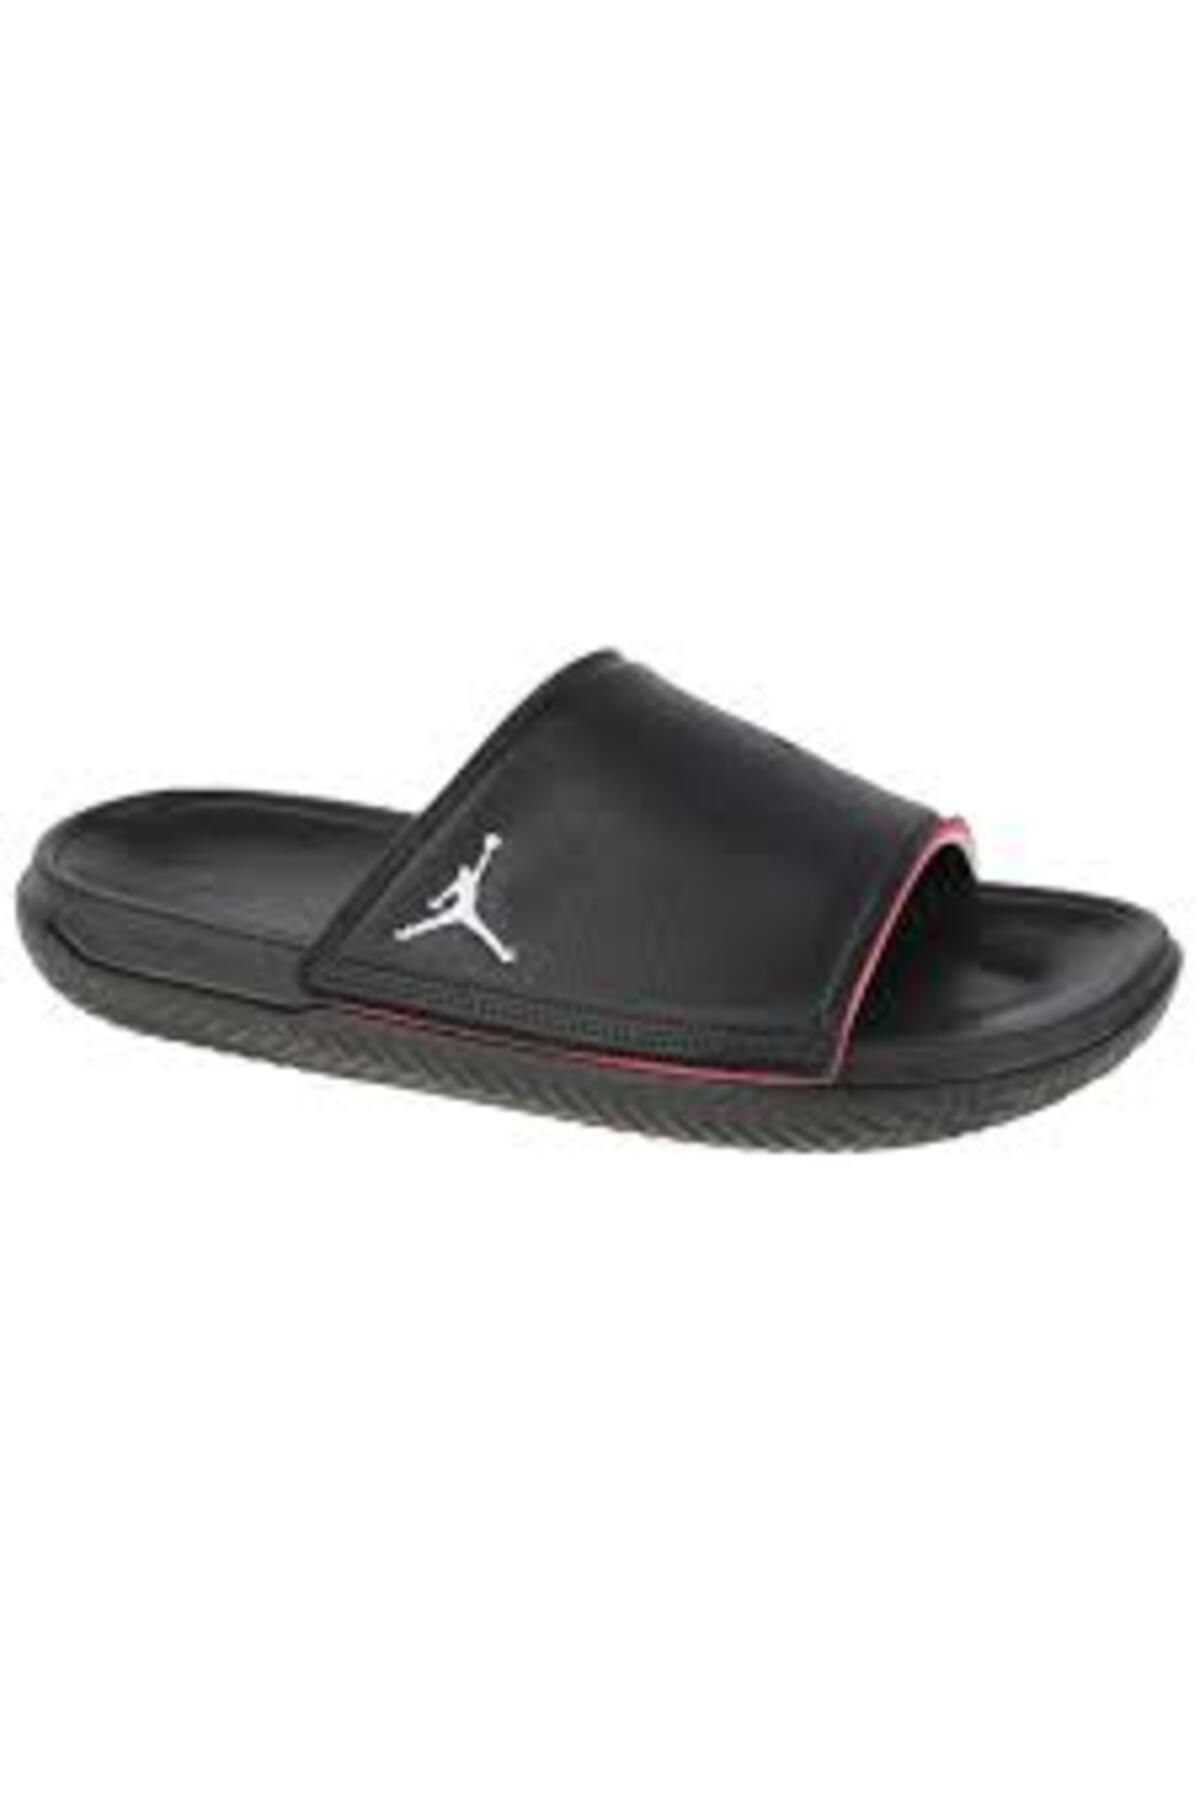 Nike Jordan Play Slide Erkek Terlik Spor Terlik DC9835-060